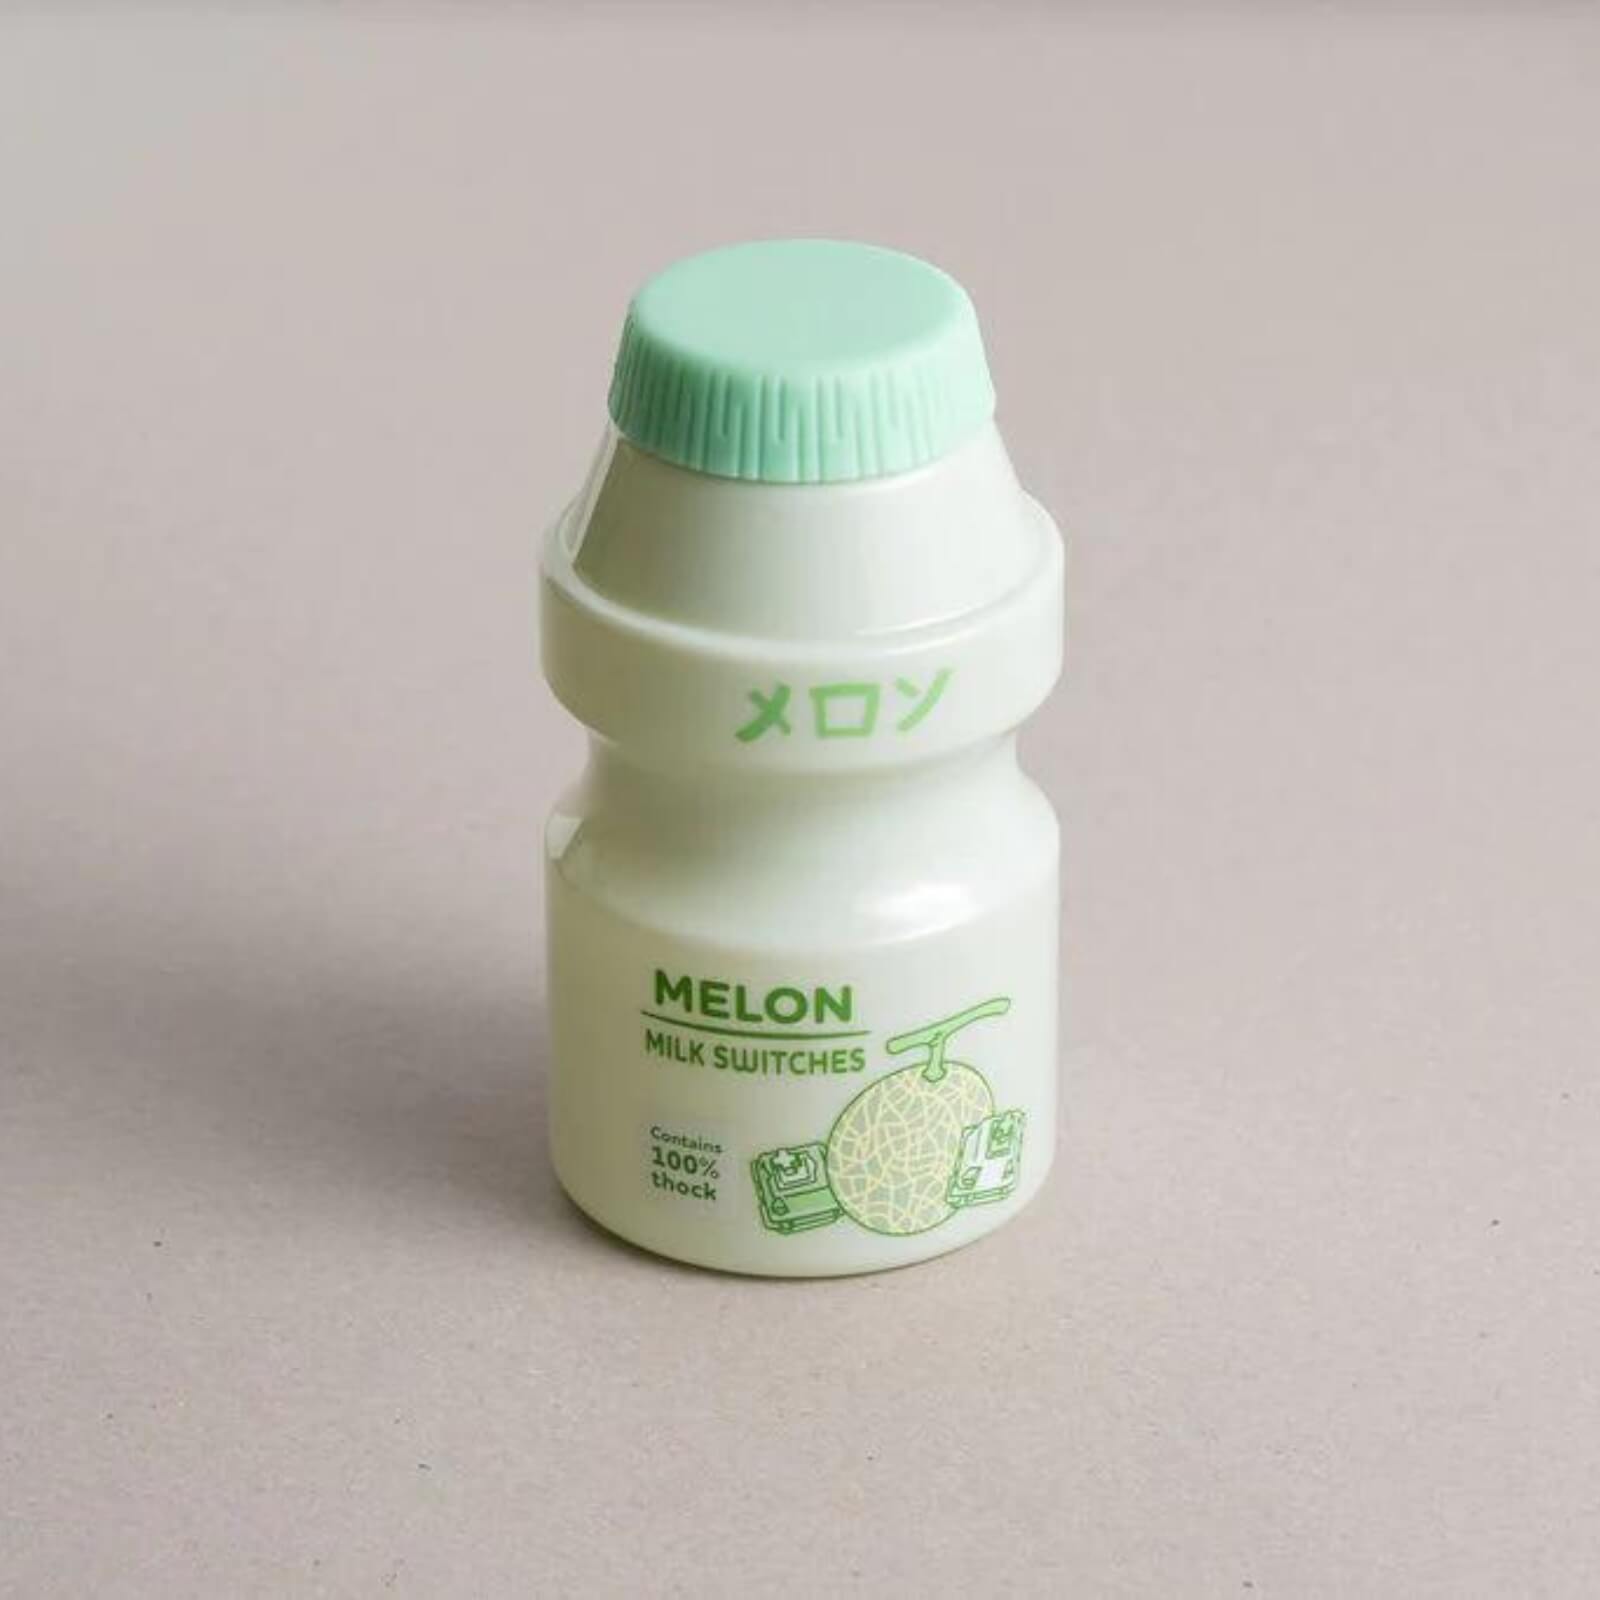 Melon Milk Tactile Switches